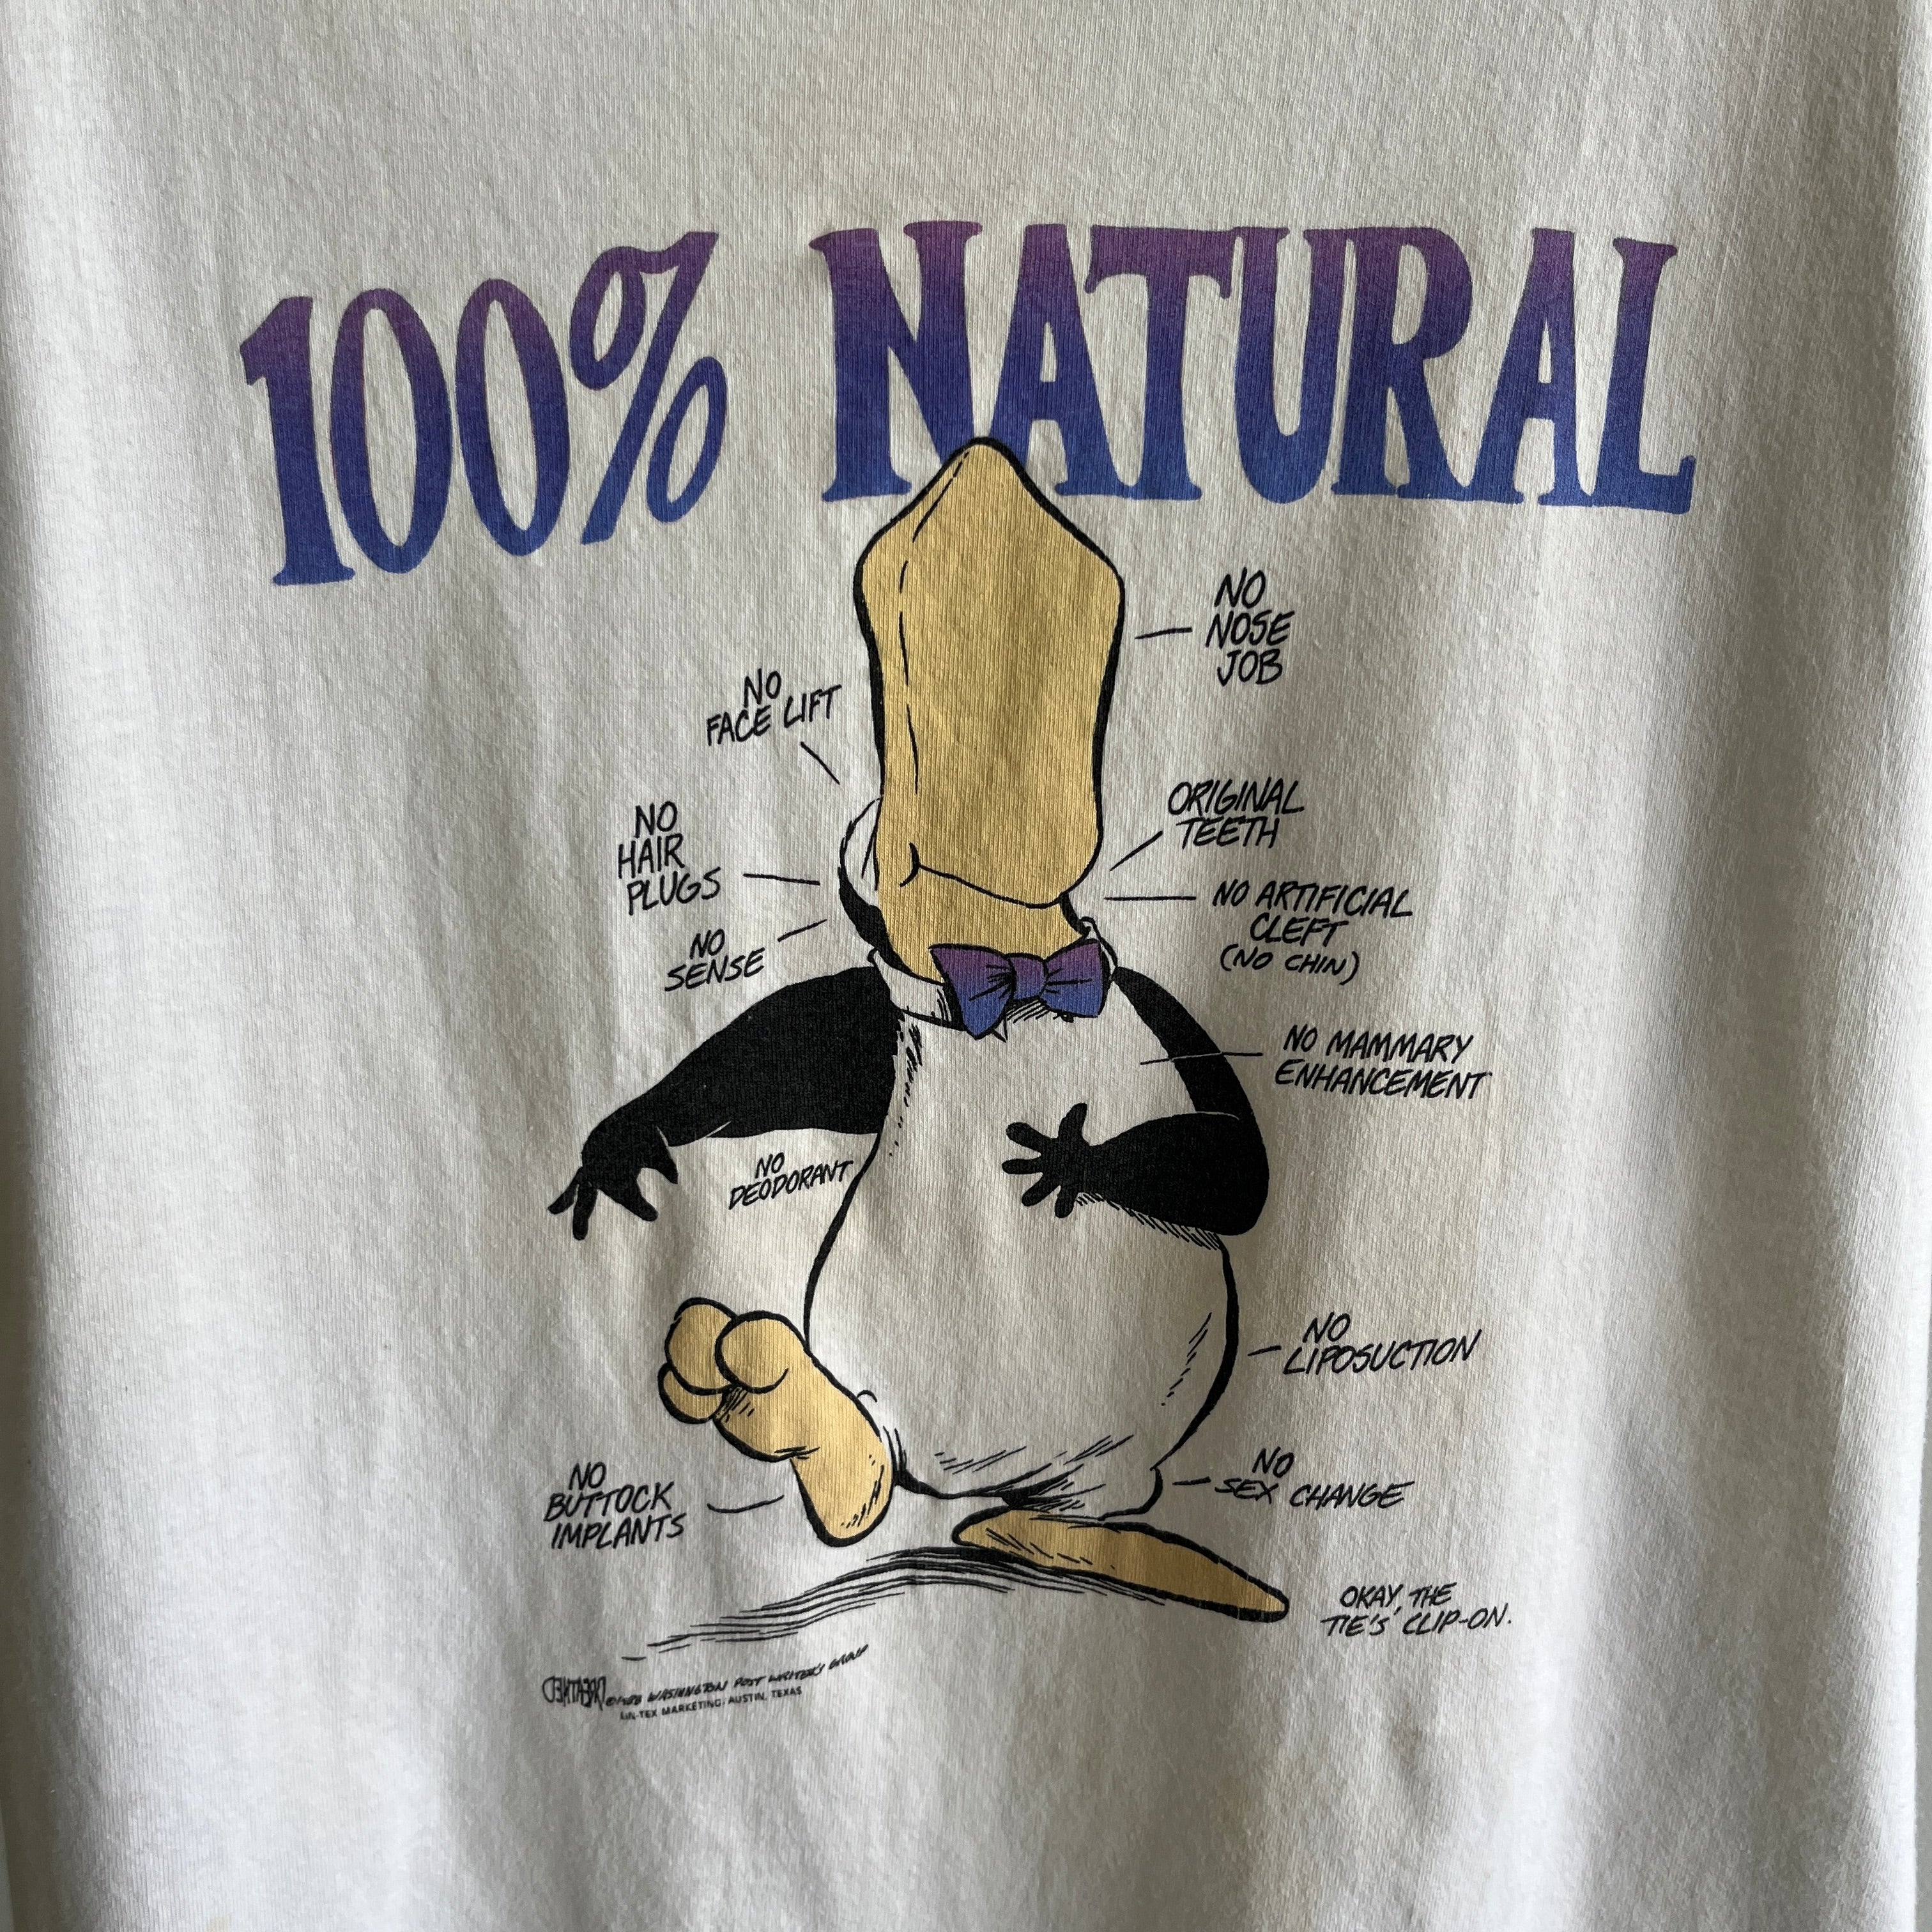 1988 100% Natural - WOWOWOWOWOW